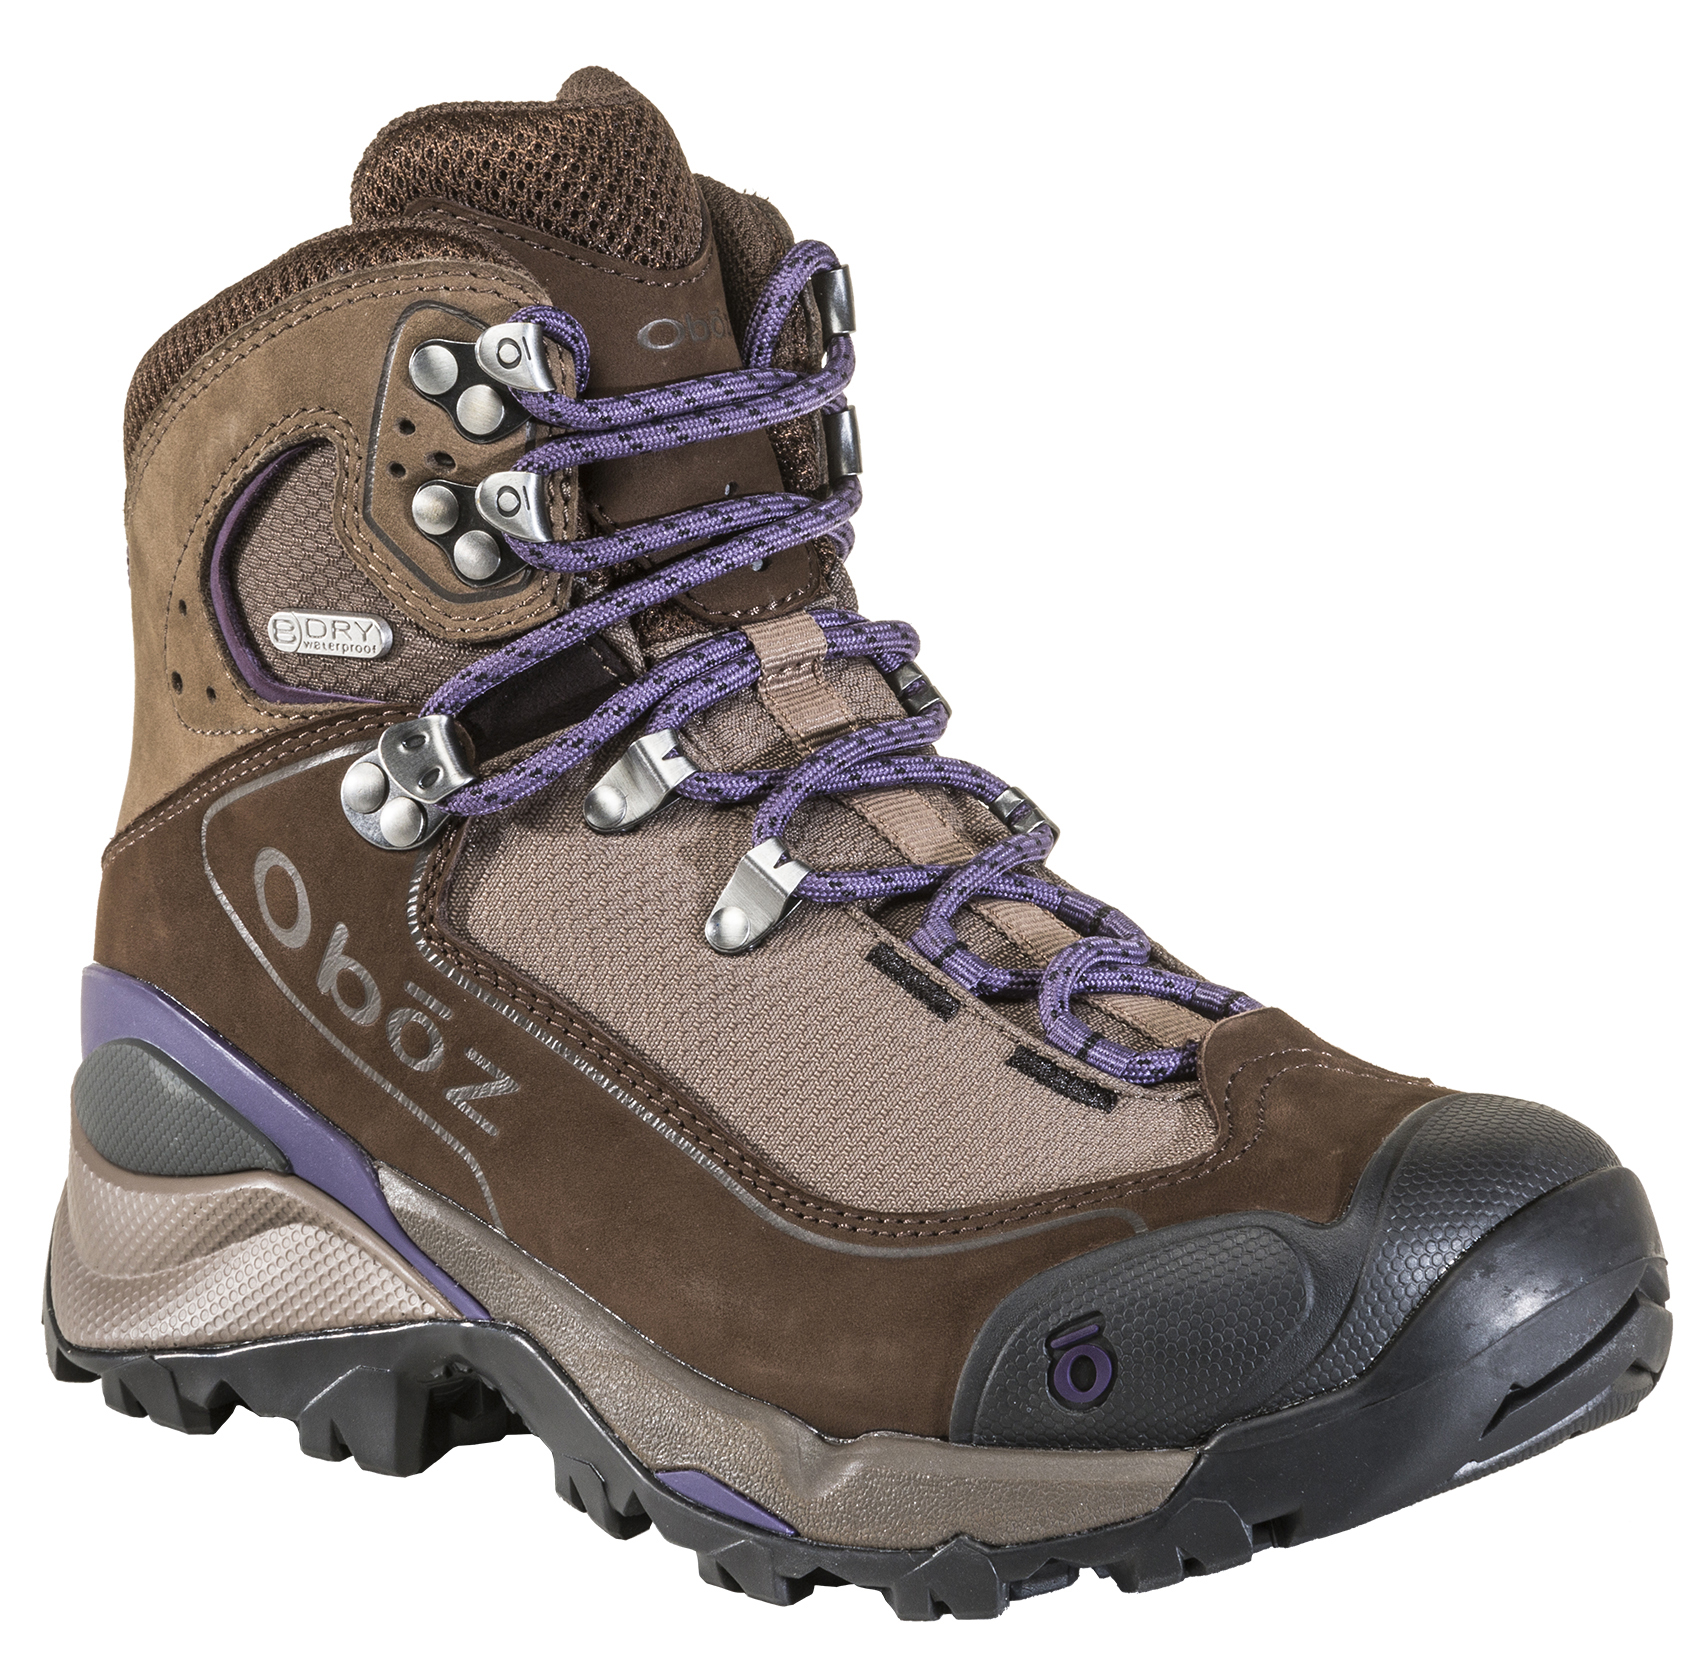 oboz hiking boots